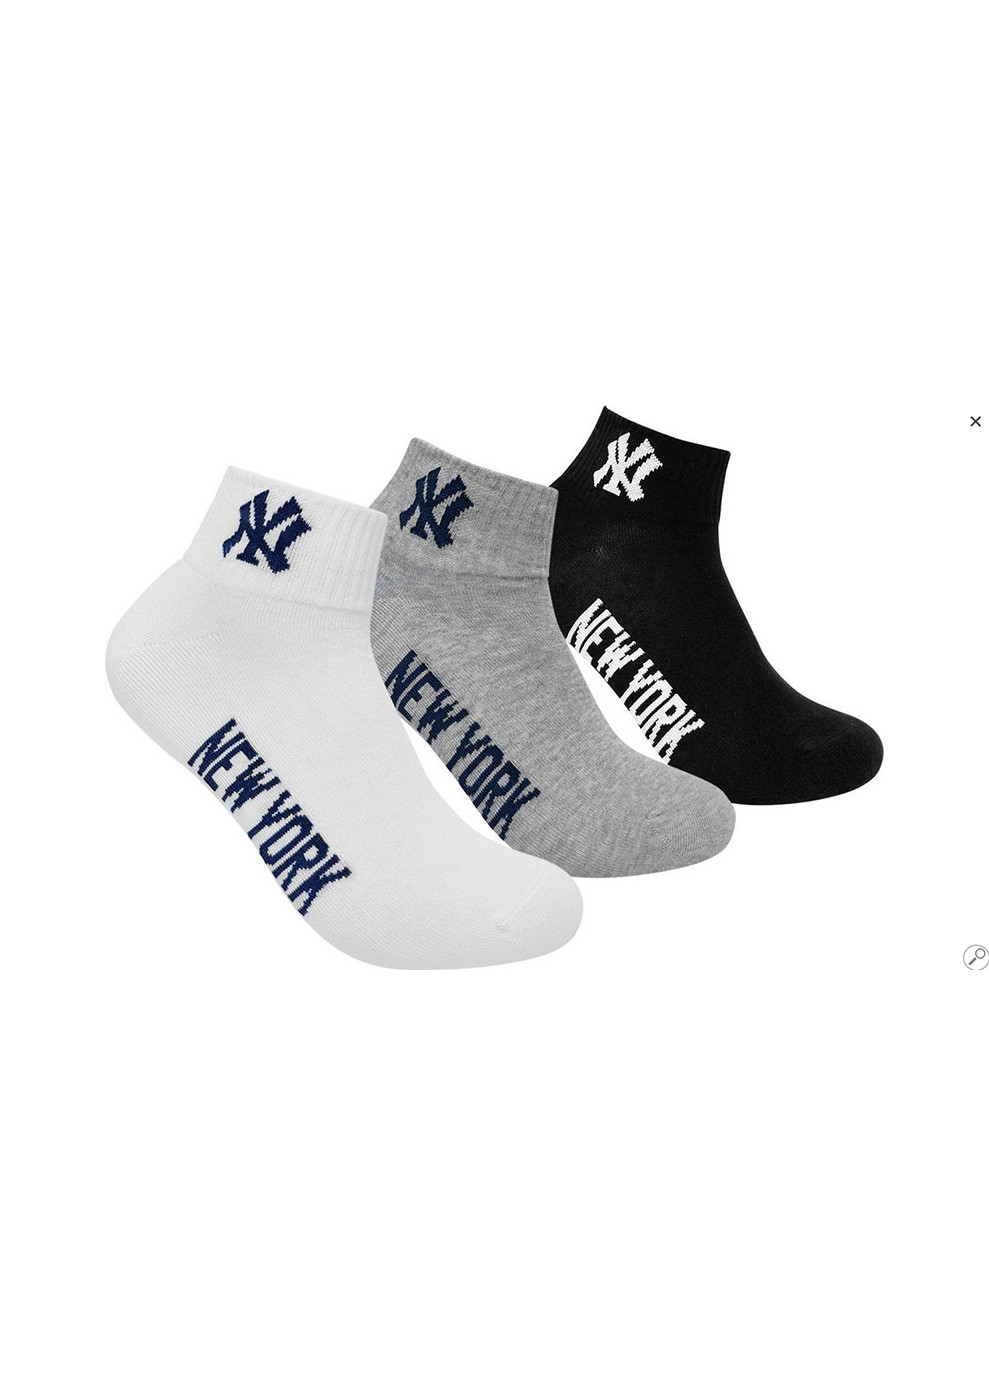 Носки Quarter 3-pack black/white/gray New York Yankees (253684348)